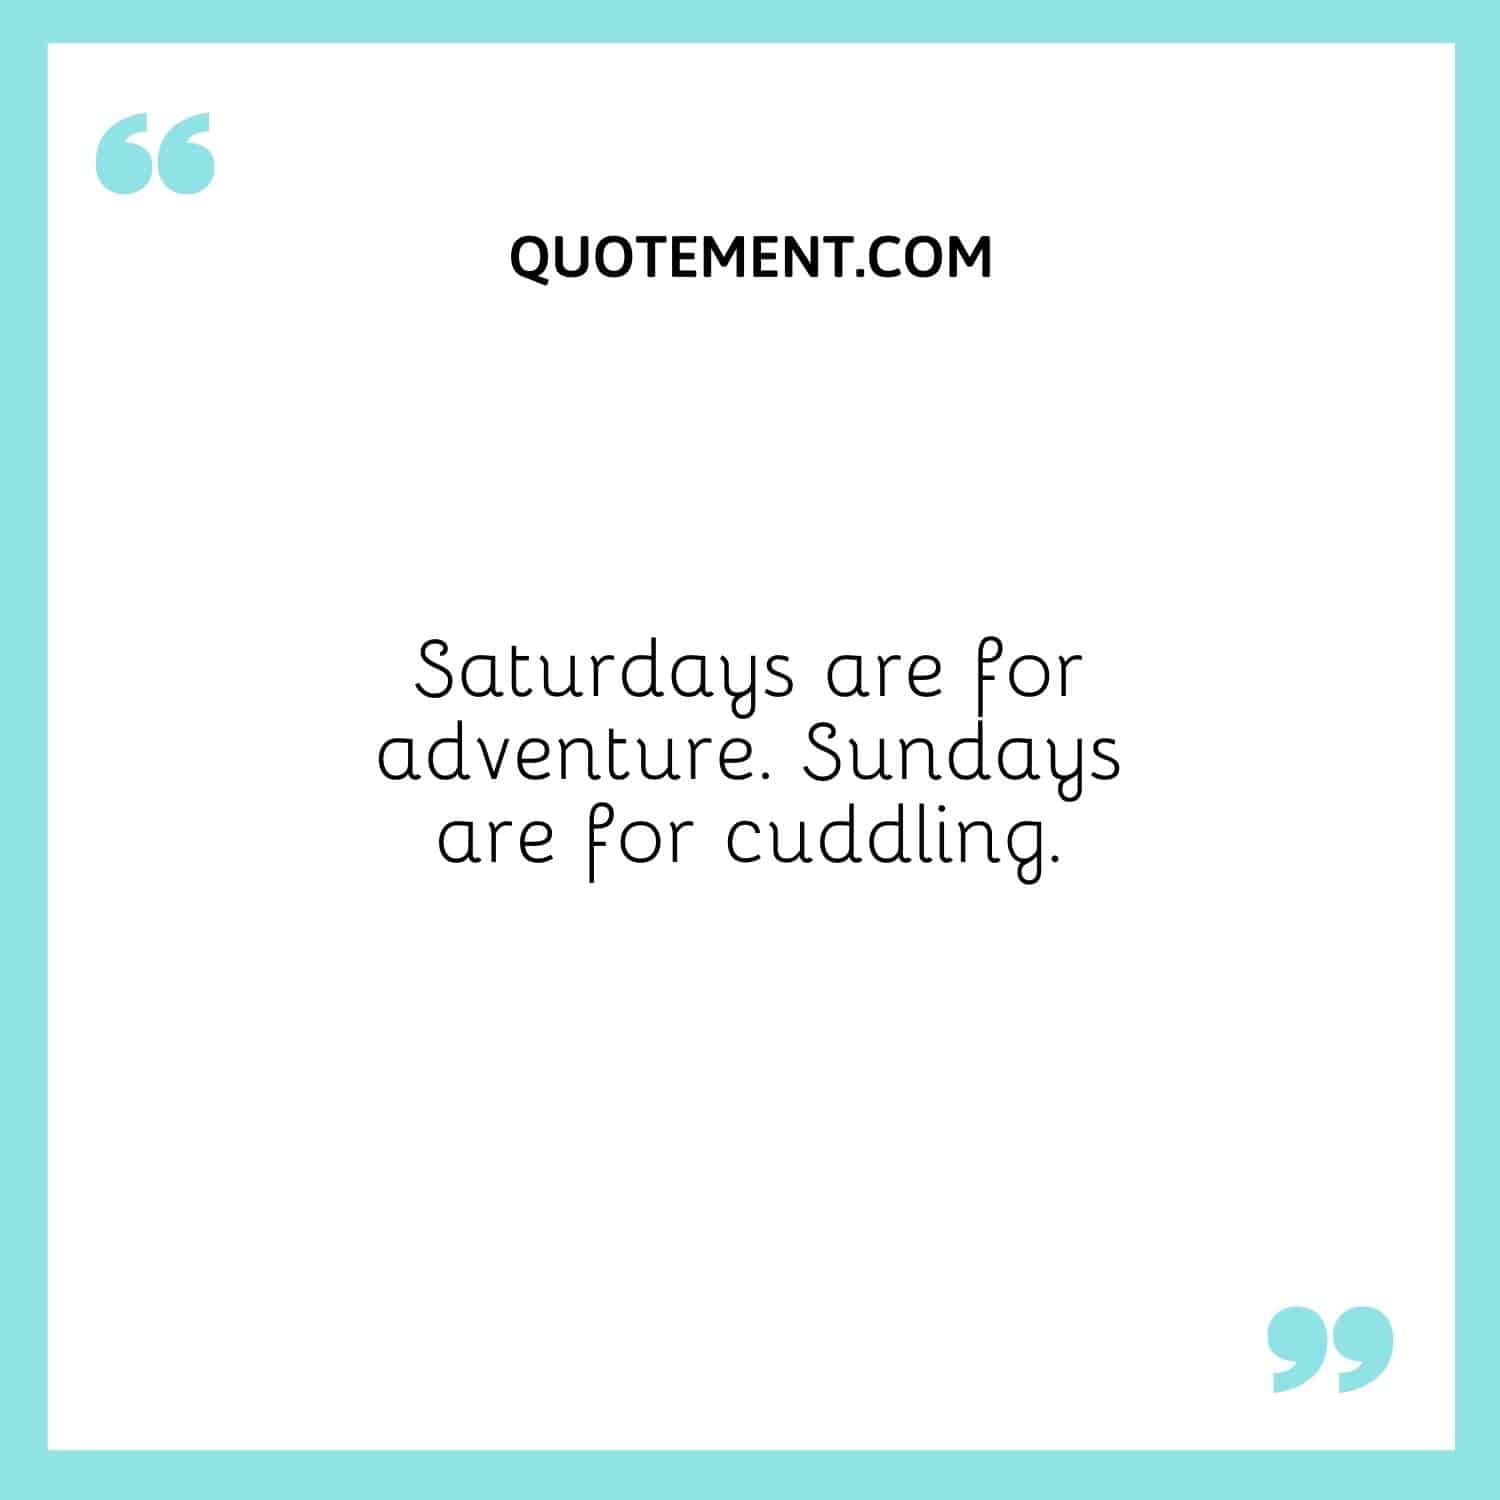 Sundays are for cuddling.